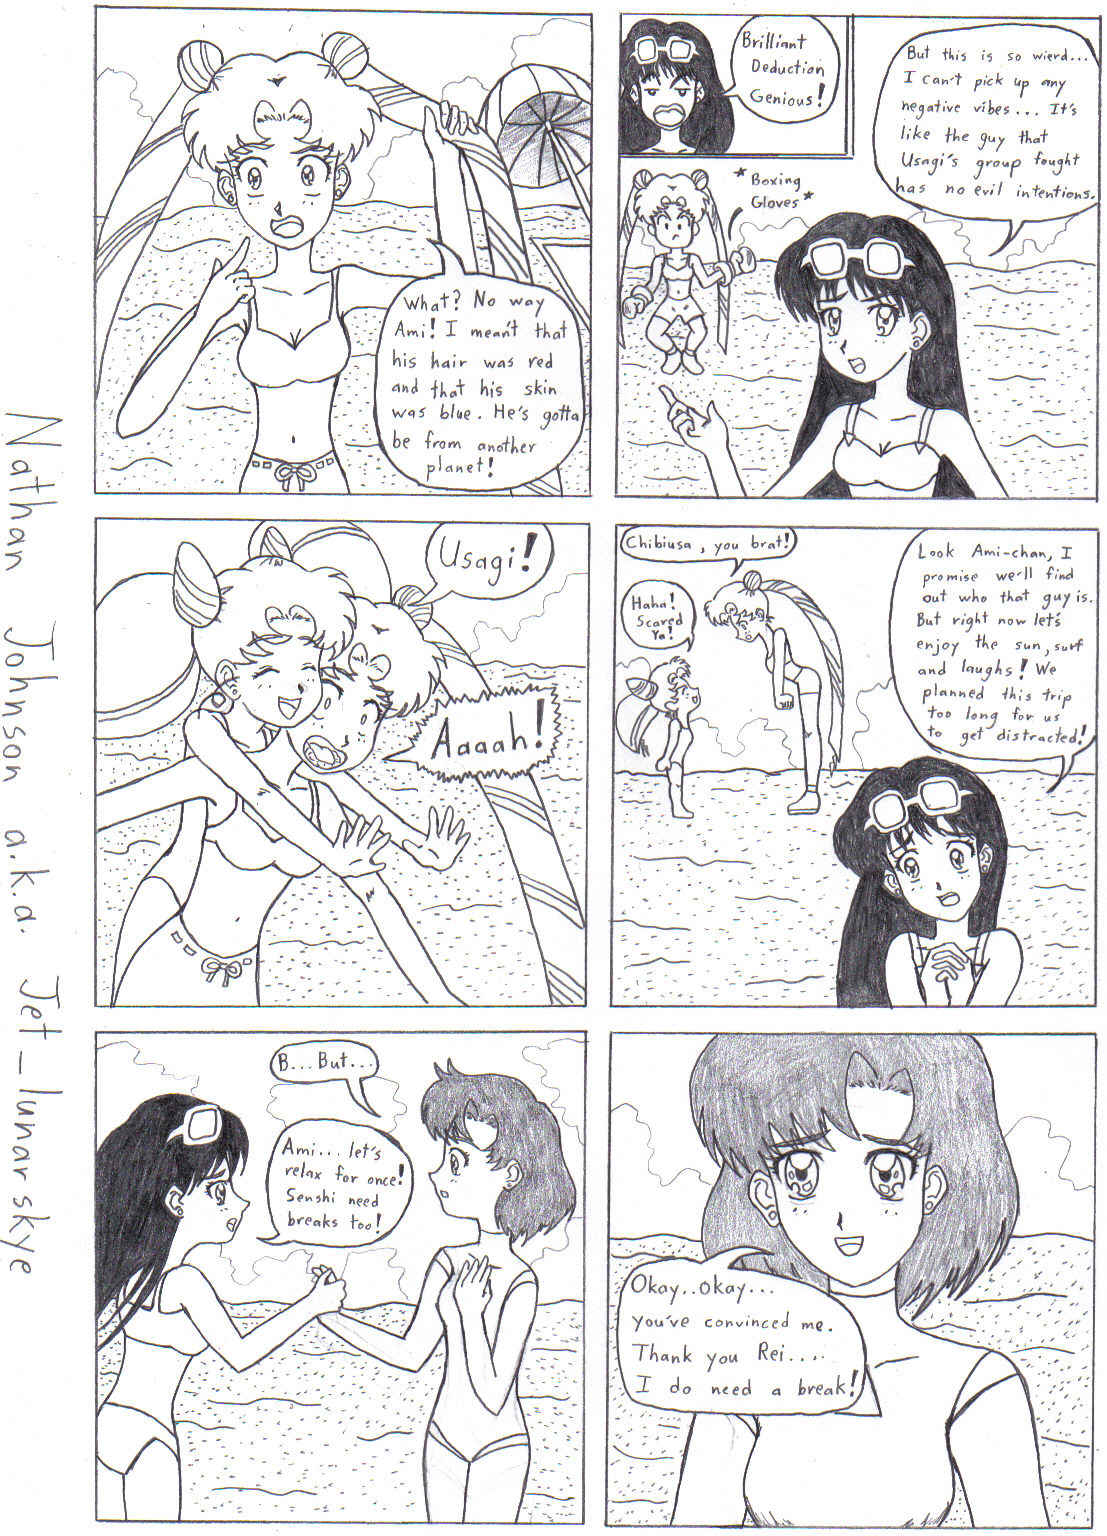 A Soldier's love: Page 16 by Jet_lunarskye